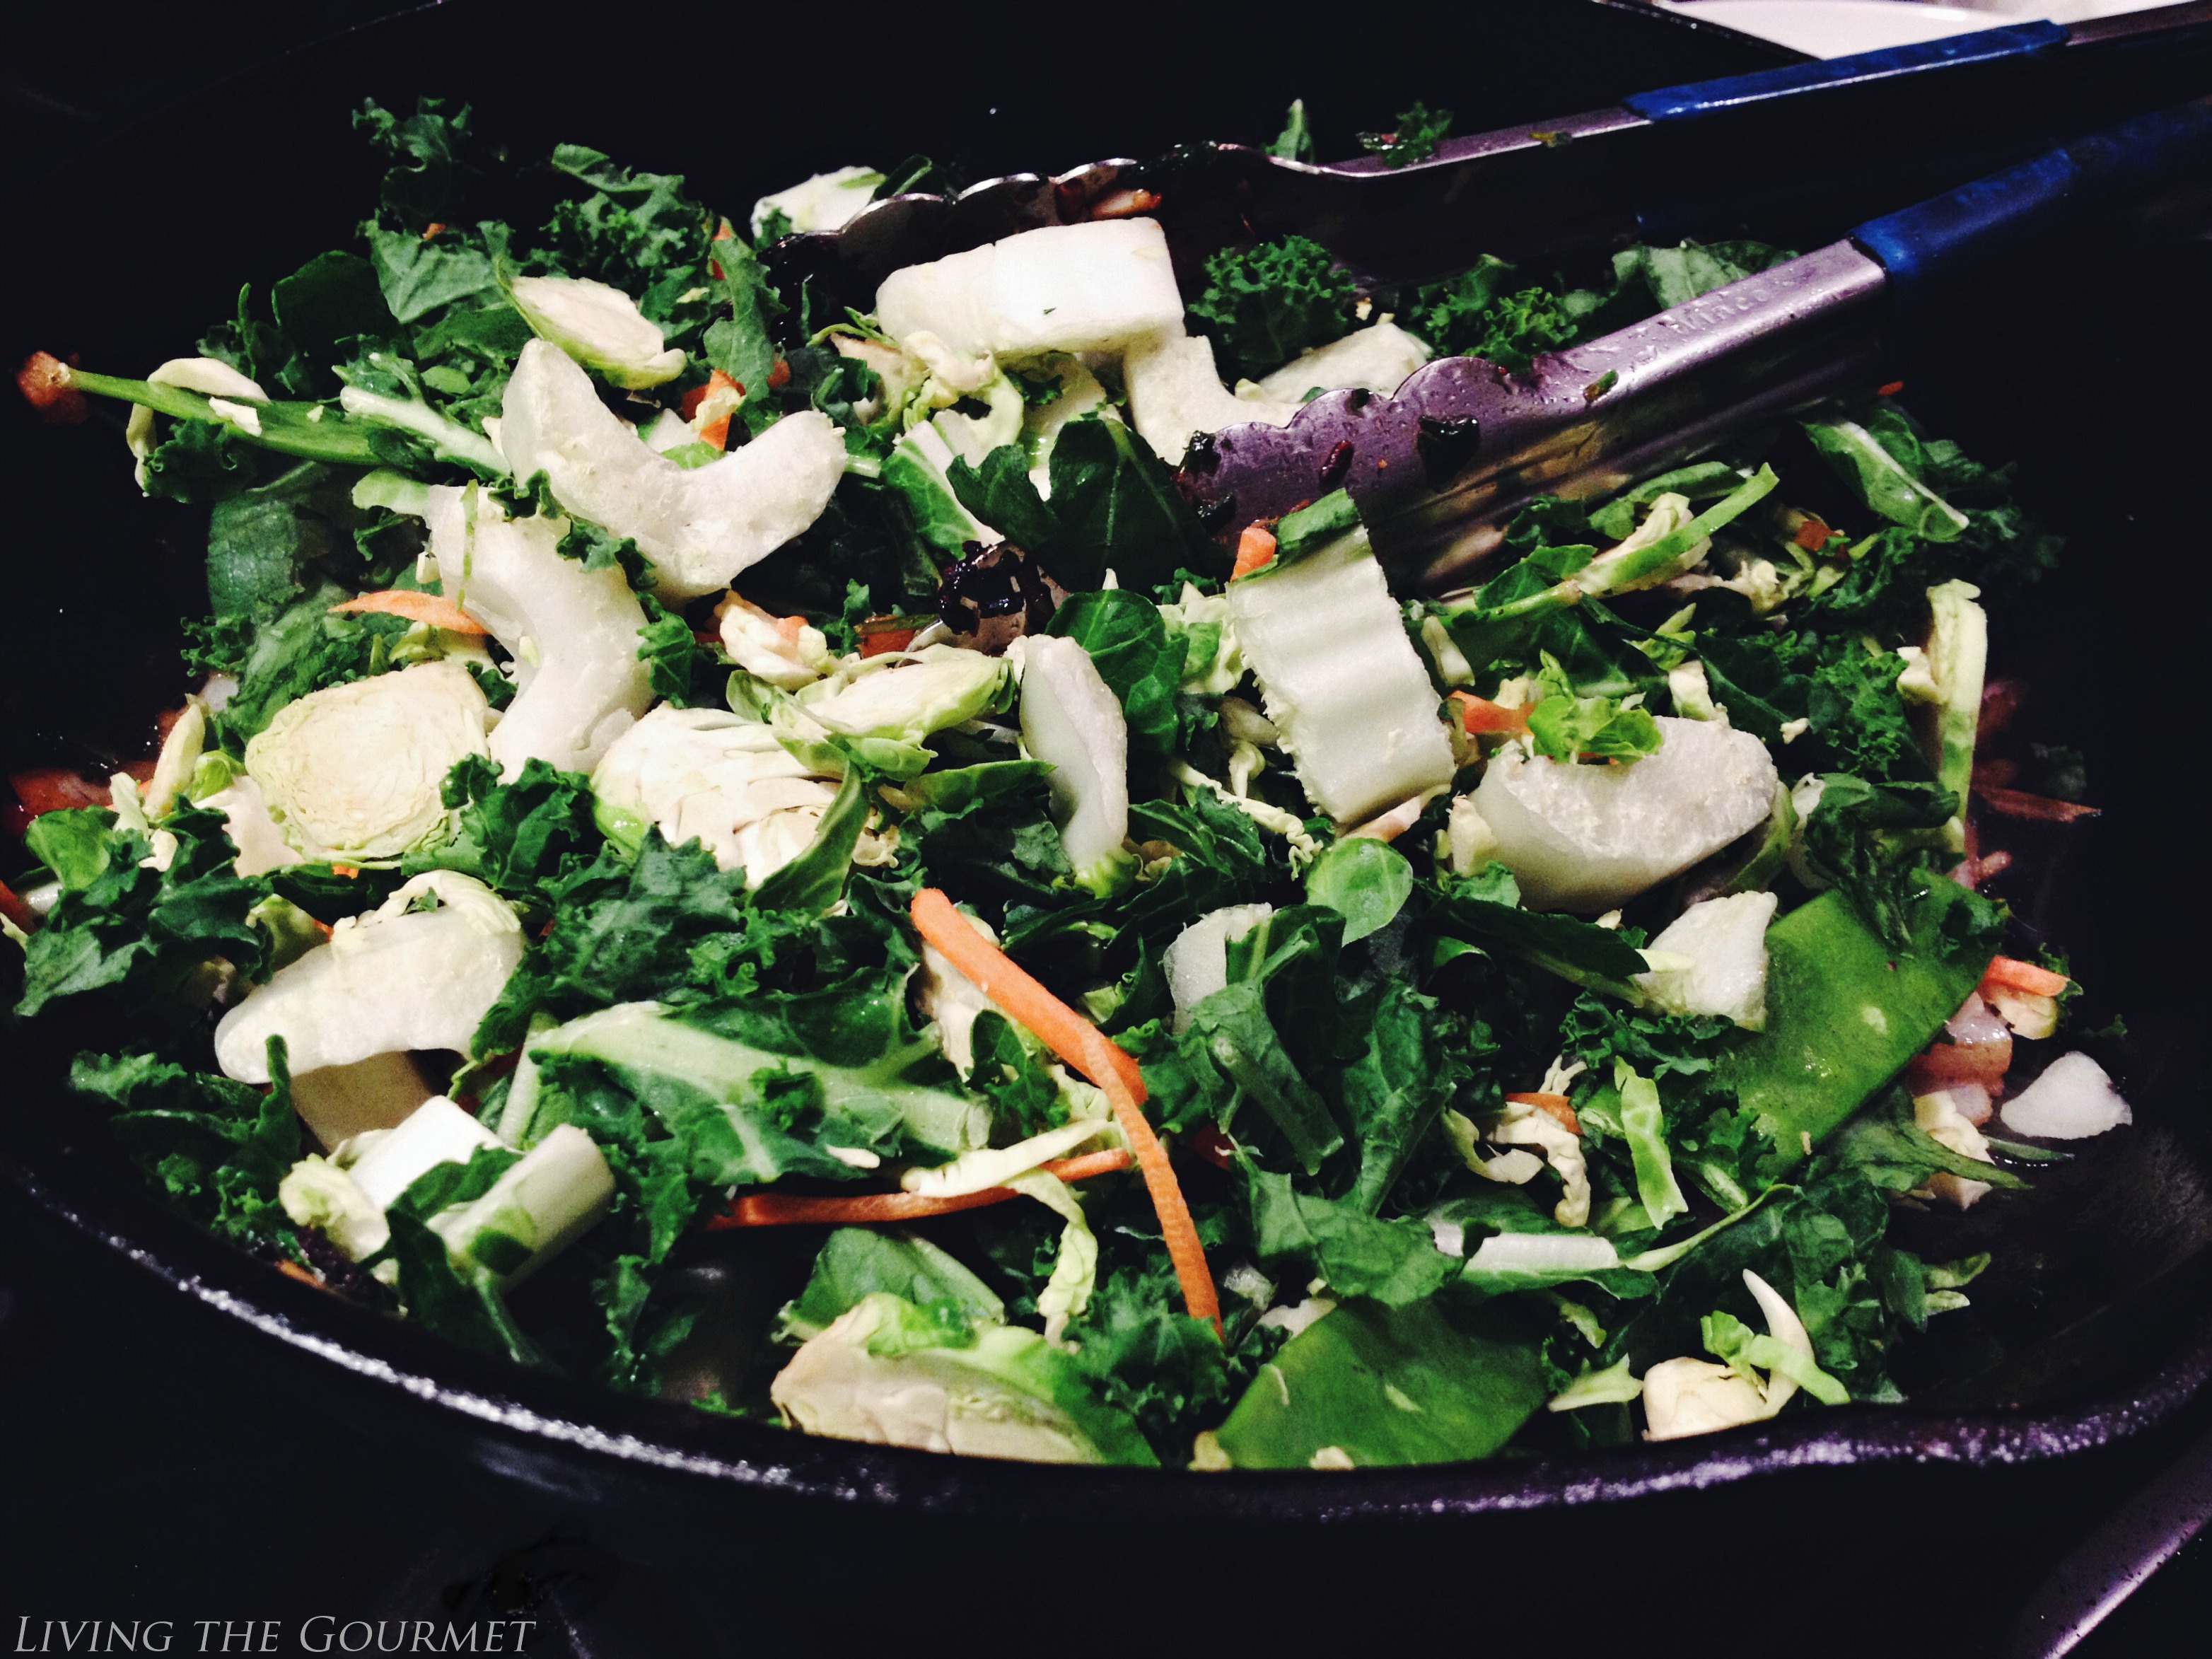 Eat Smart® Salad Kits Shanghai Blend Stir Fry Kit - Living The Gourmet